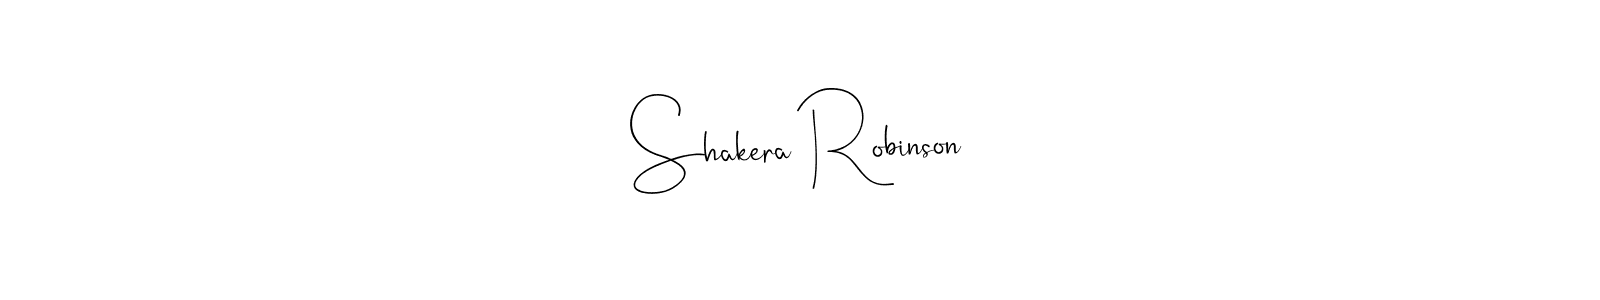 89+ Shakera Robinson Name Signature Style Ideas | Free Electronic Sign